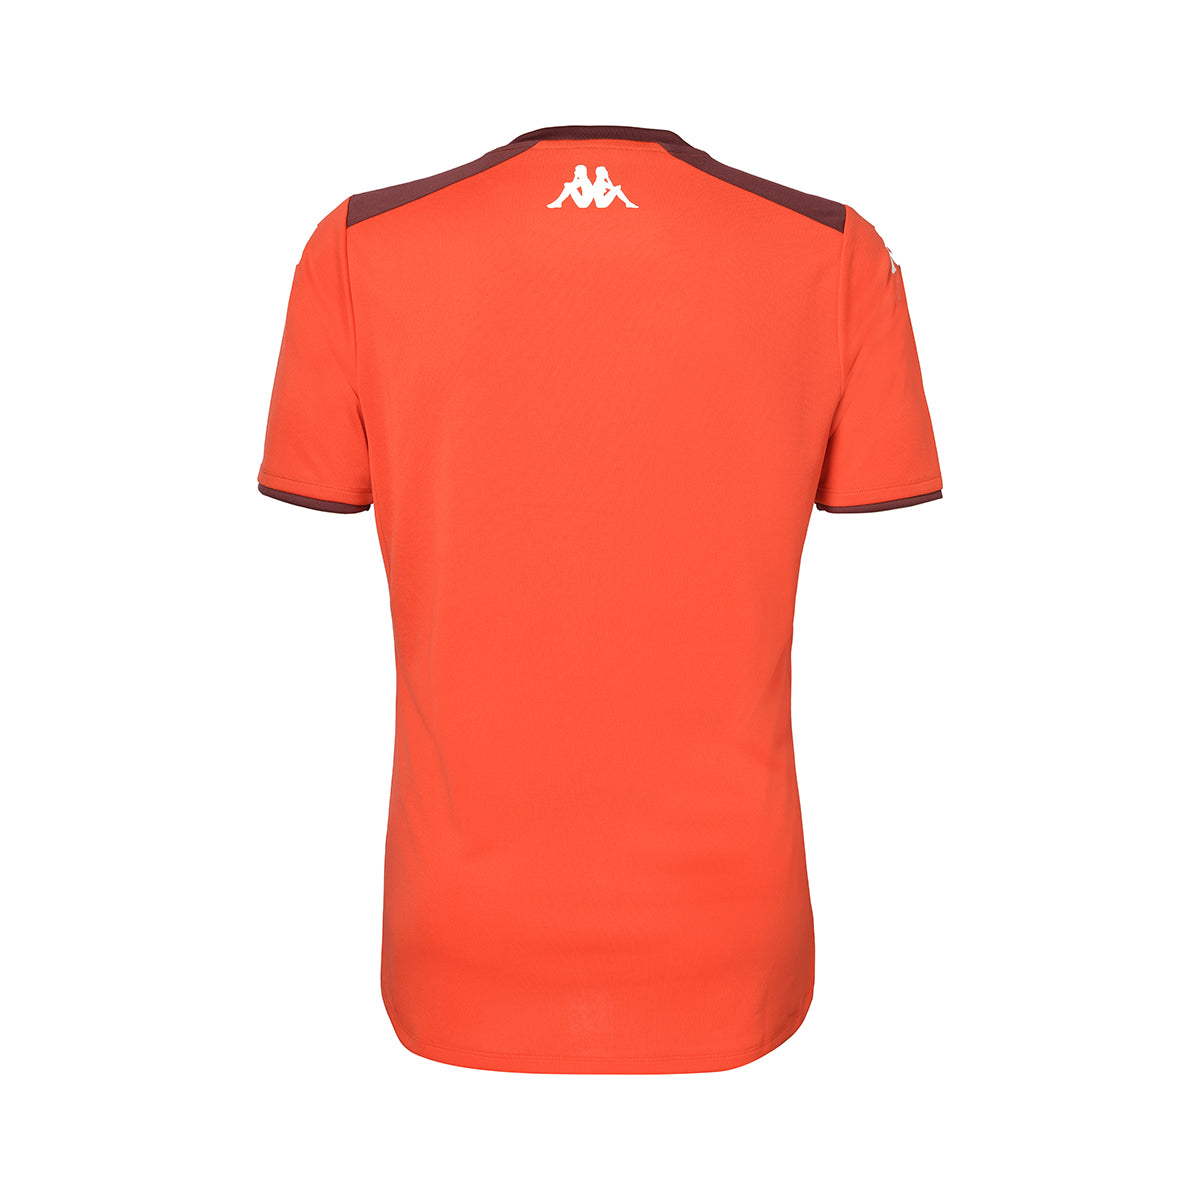 Maillot Abou Pro 5 FC Metz Orange homme - image 2